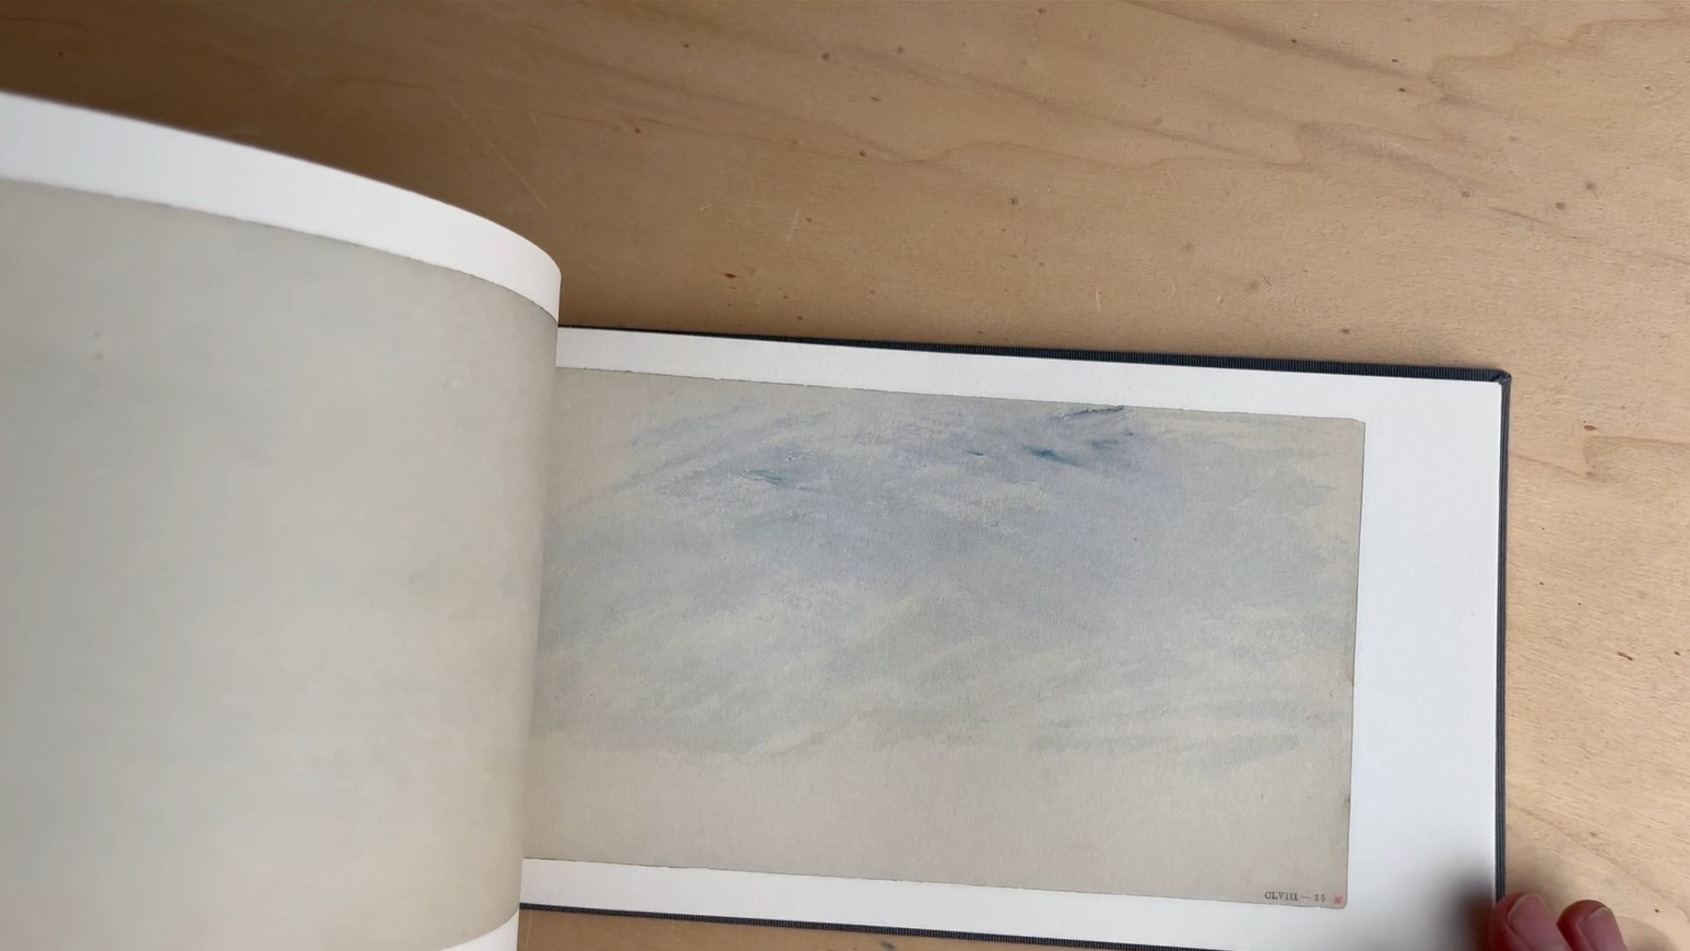  英國畫家威廉‧透納的天空畫作。Turner’s Skies Drawing.